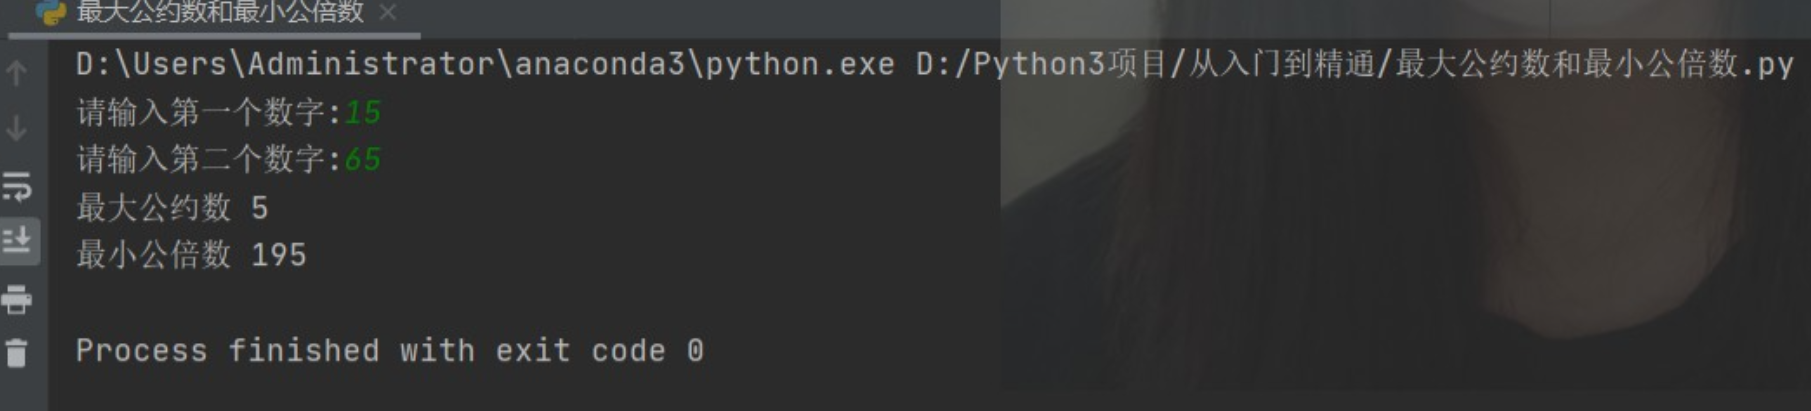 python语言编程——求最大公约数和最小公倍数算法